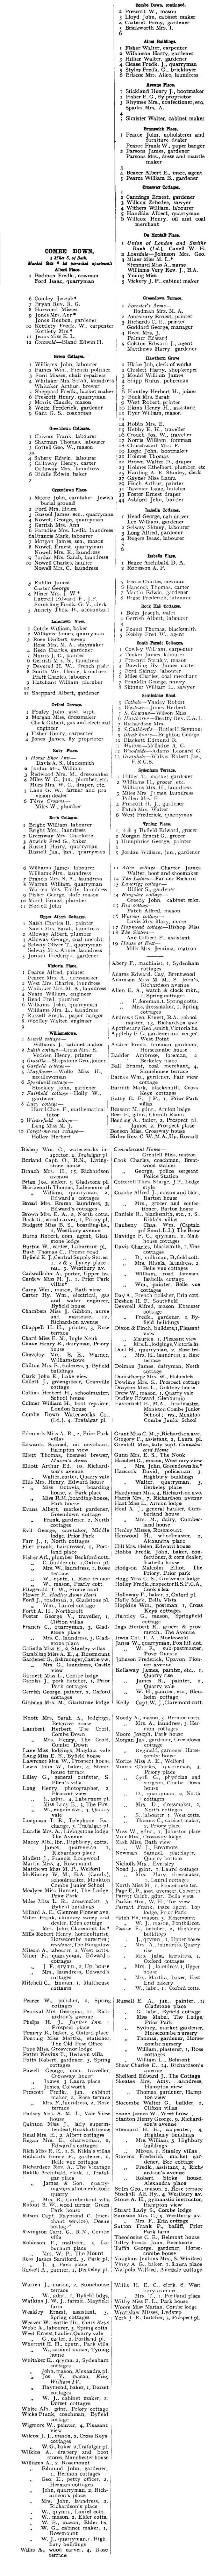 1911 po directory combe down